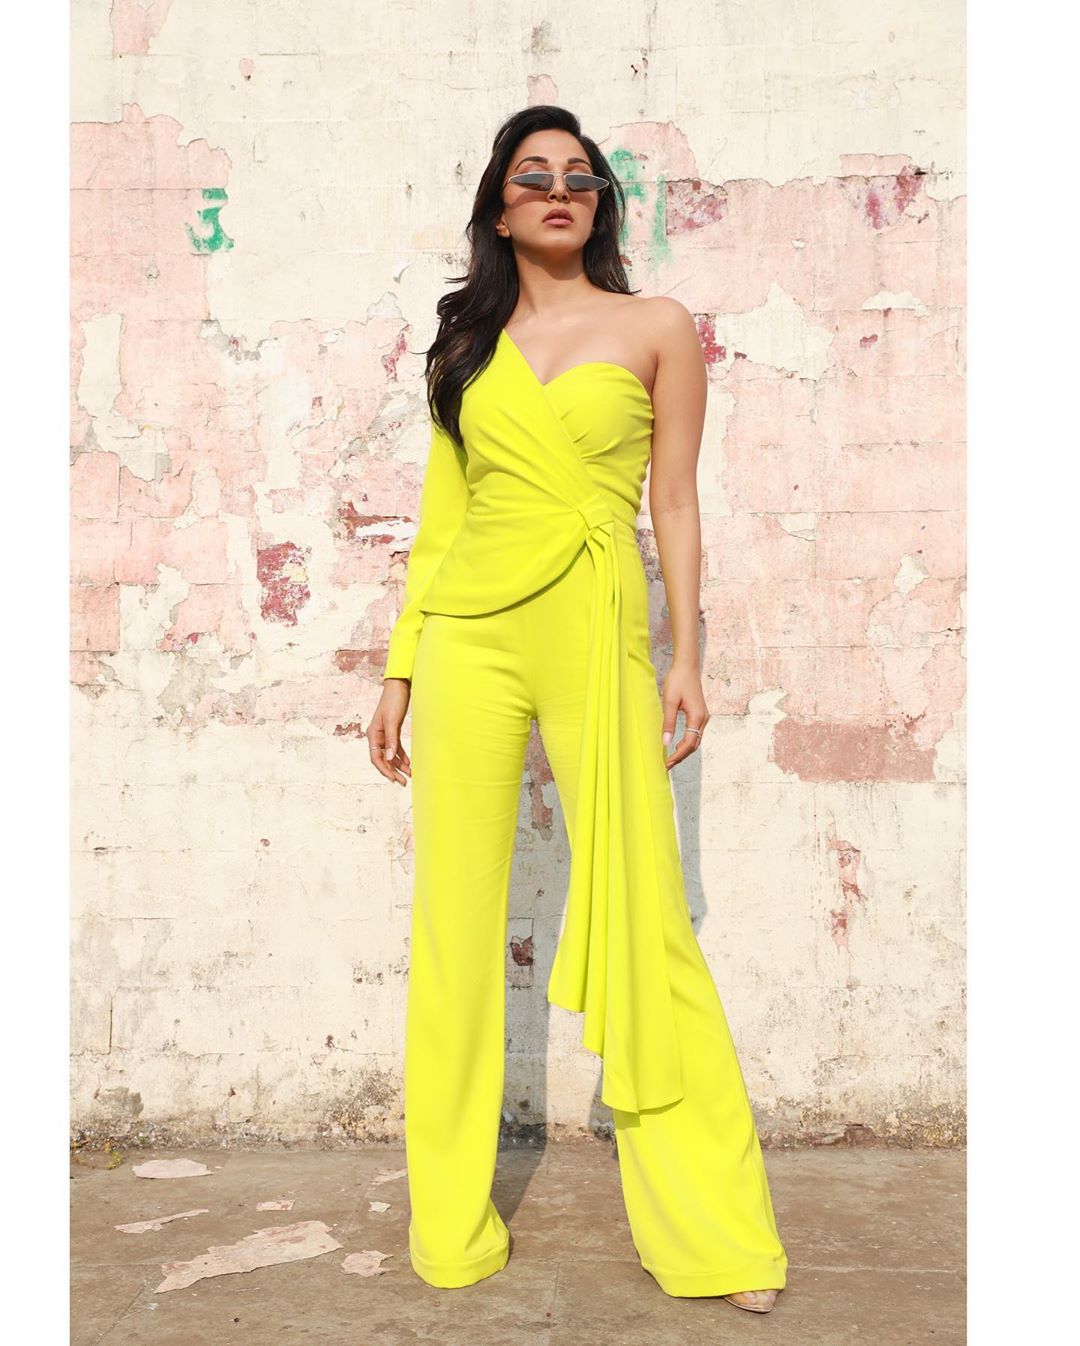 Kiara Advani in glamorous yellow